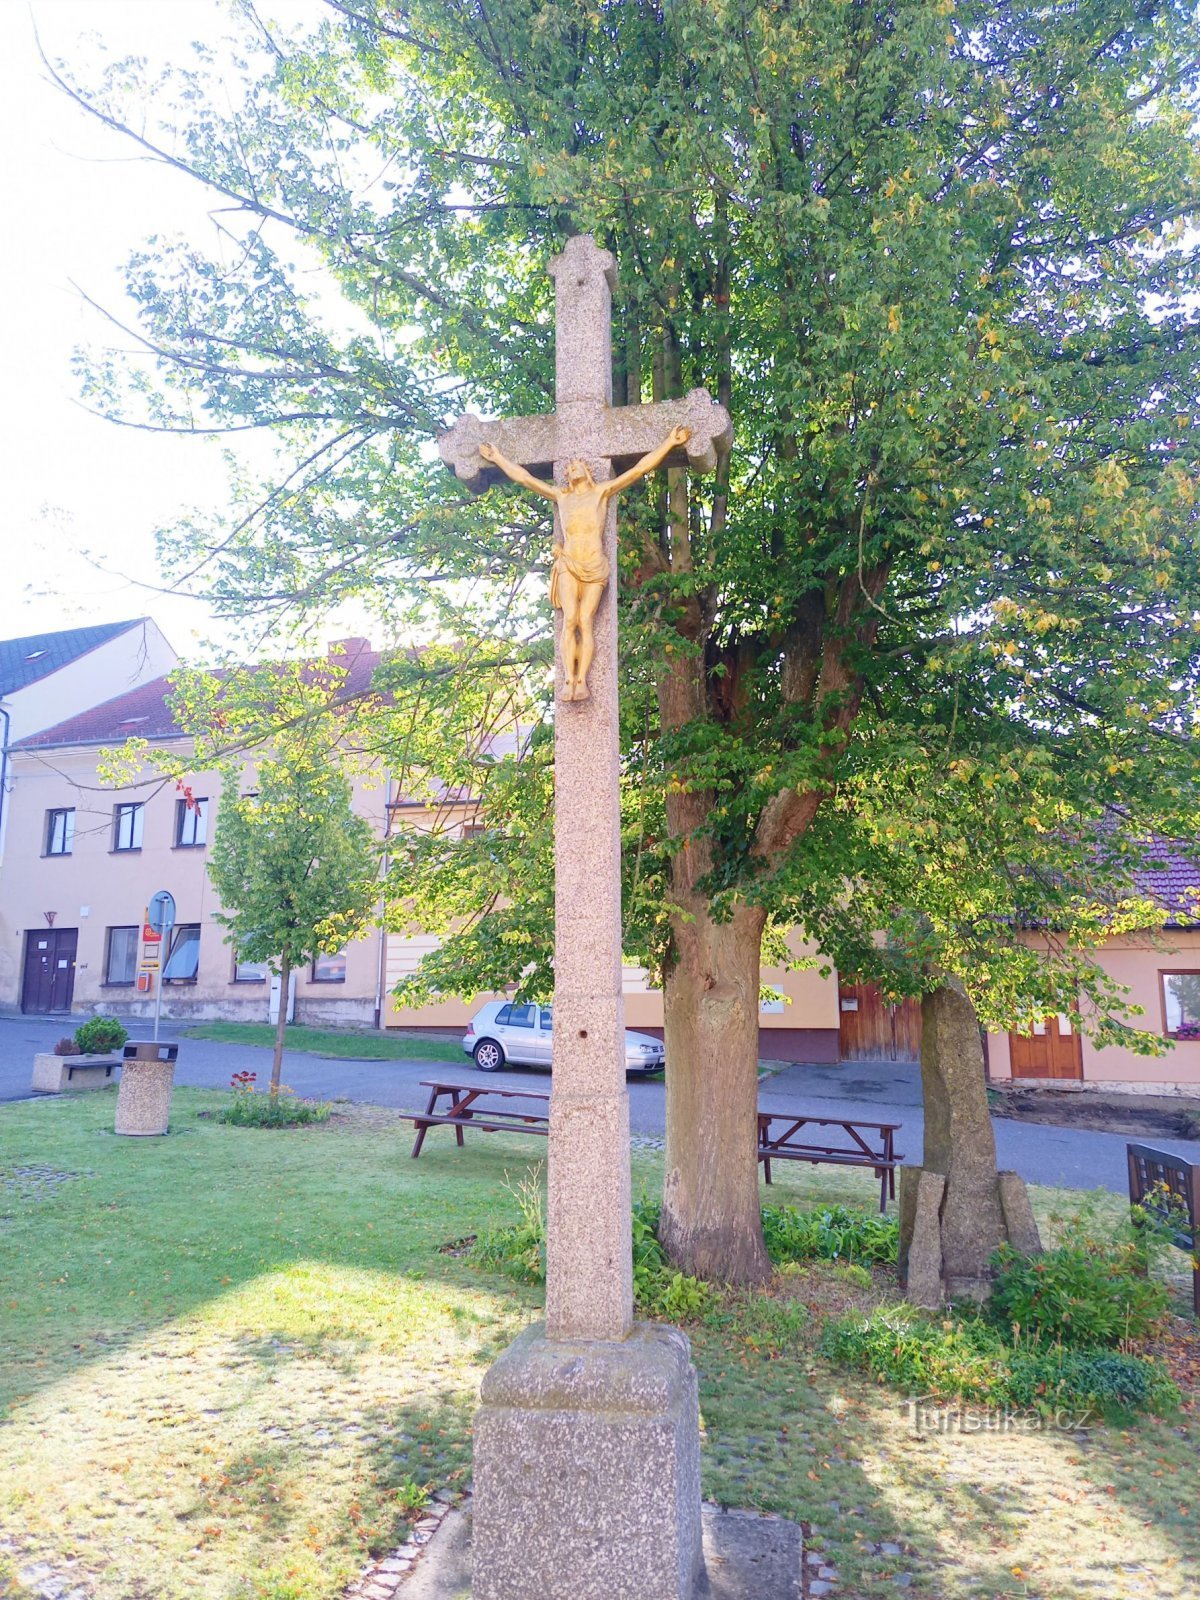 2. Krzyż z 1852 r. na placu Prokopa Chocholouški